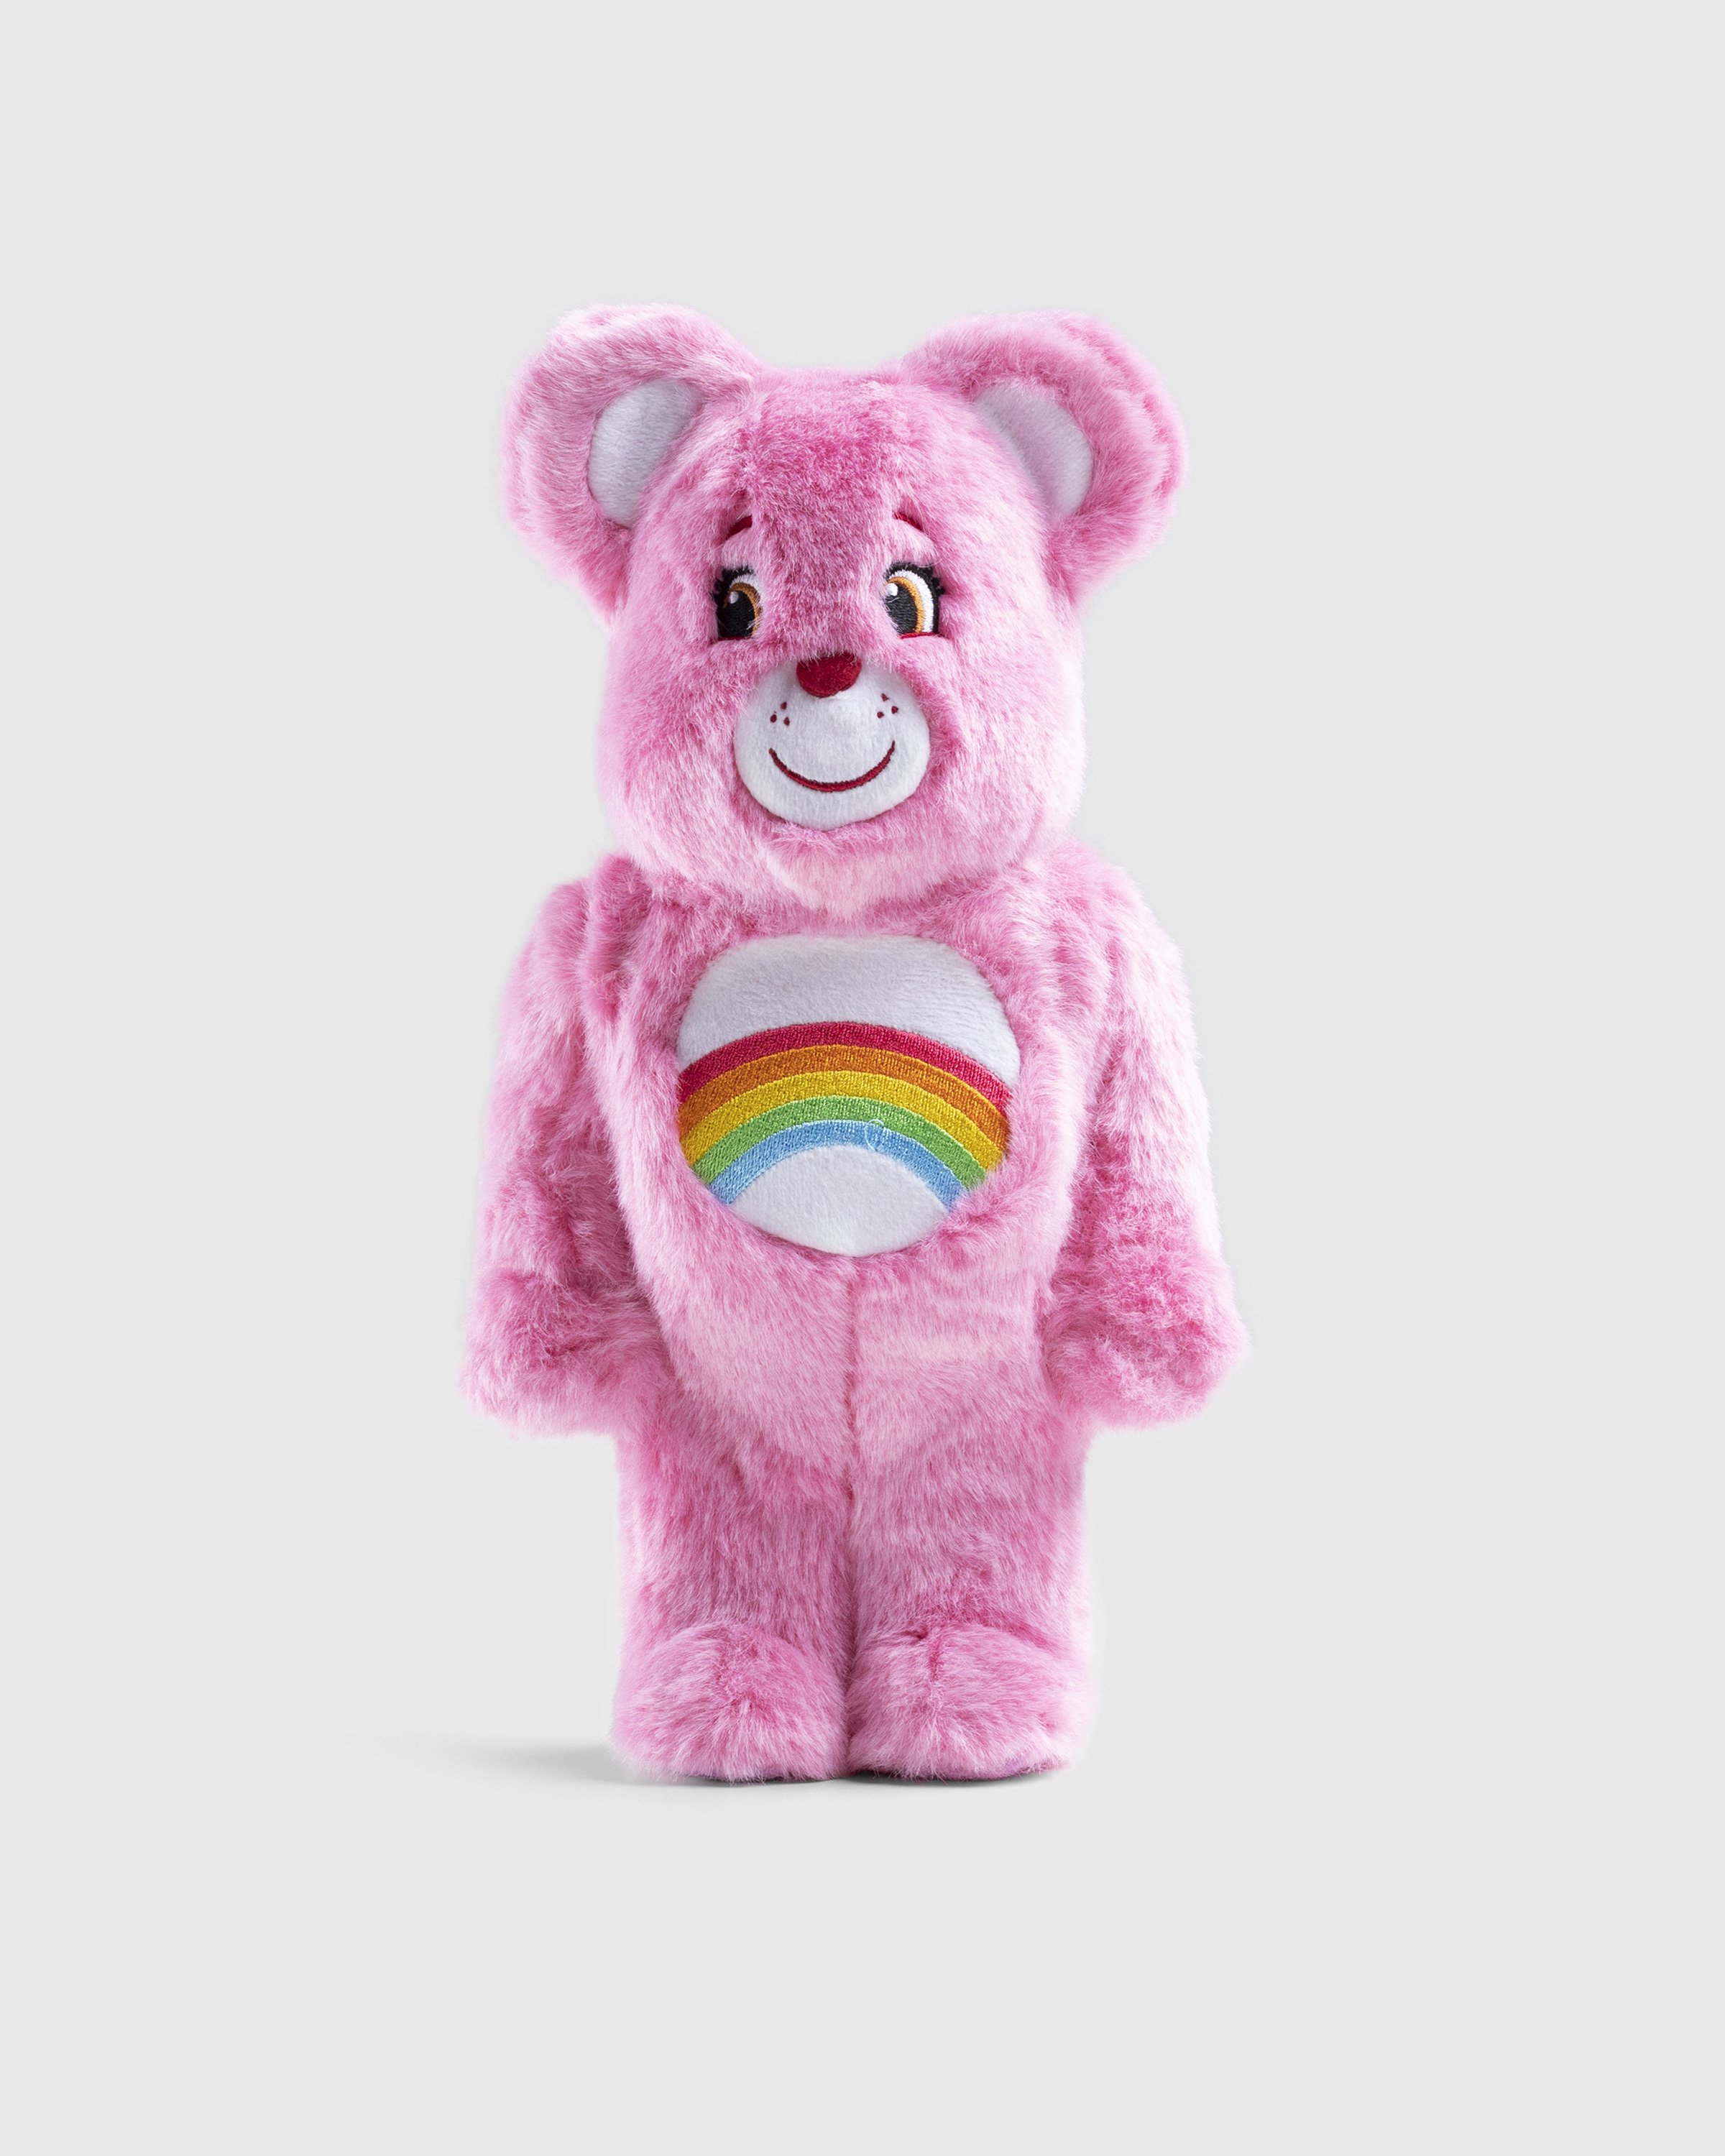 Medicom - Be@rbrick Cheer Bear Costume Version 1000% Pink - Lifestyle - Pink - Image 1